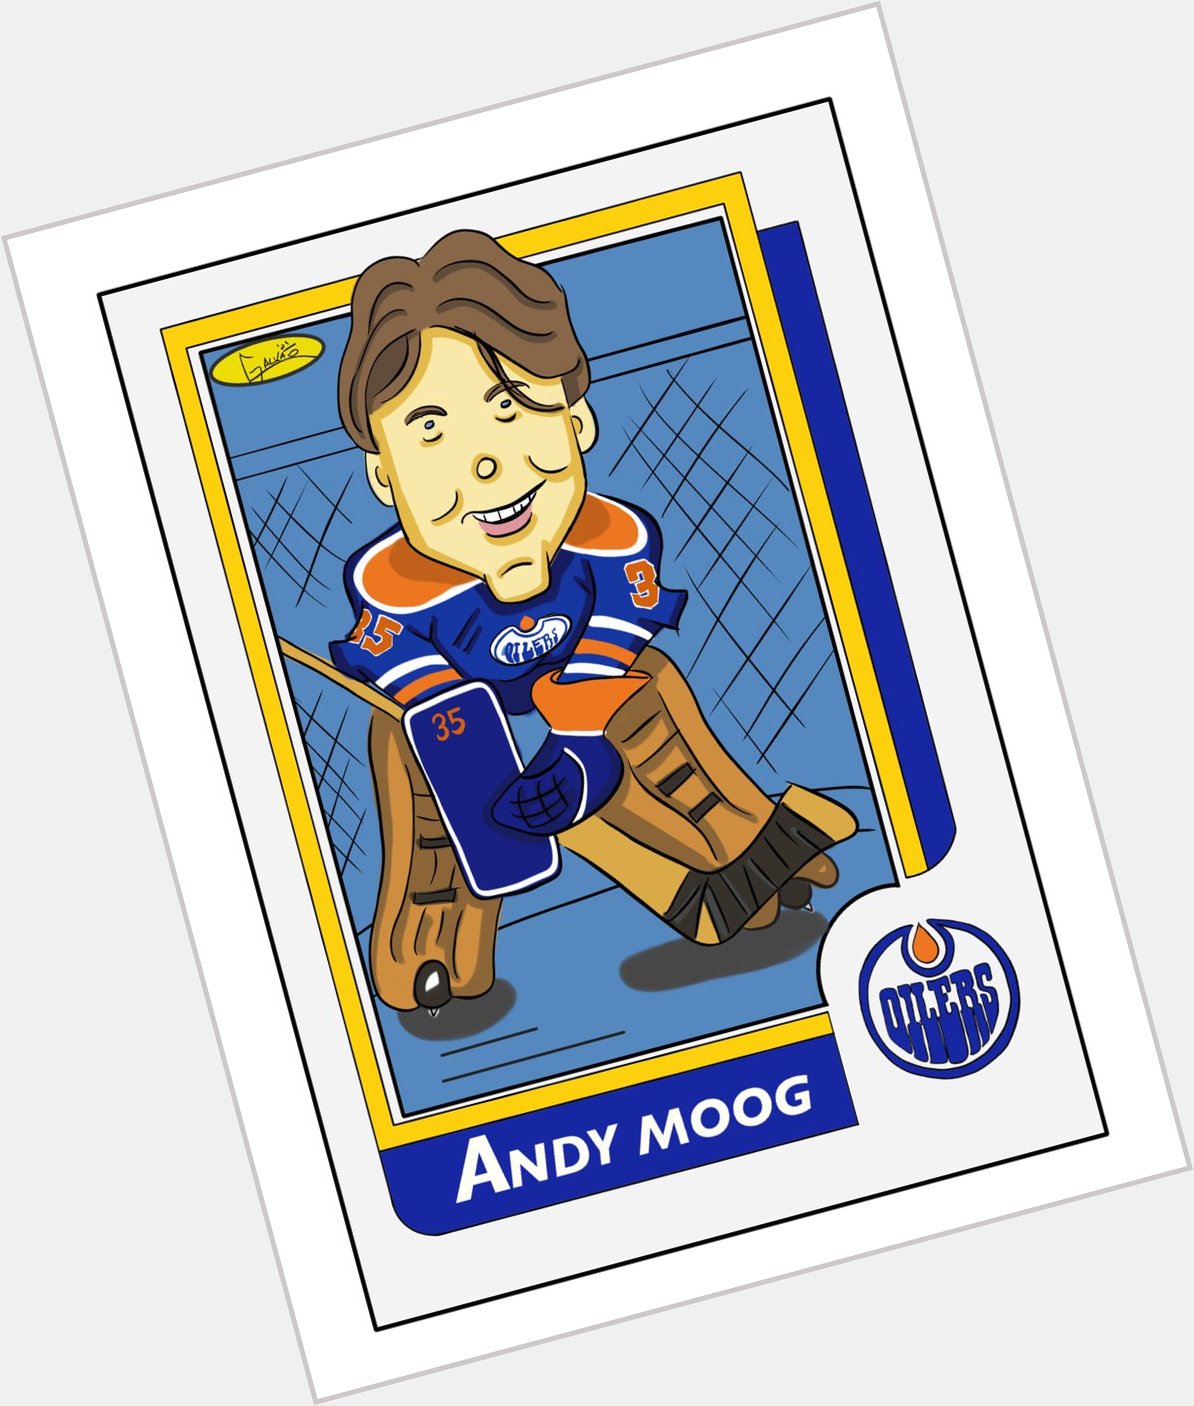 Happy birthday to former goalie Andy Moog. 